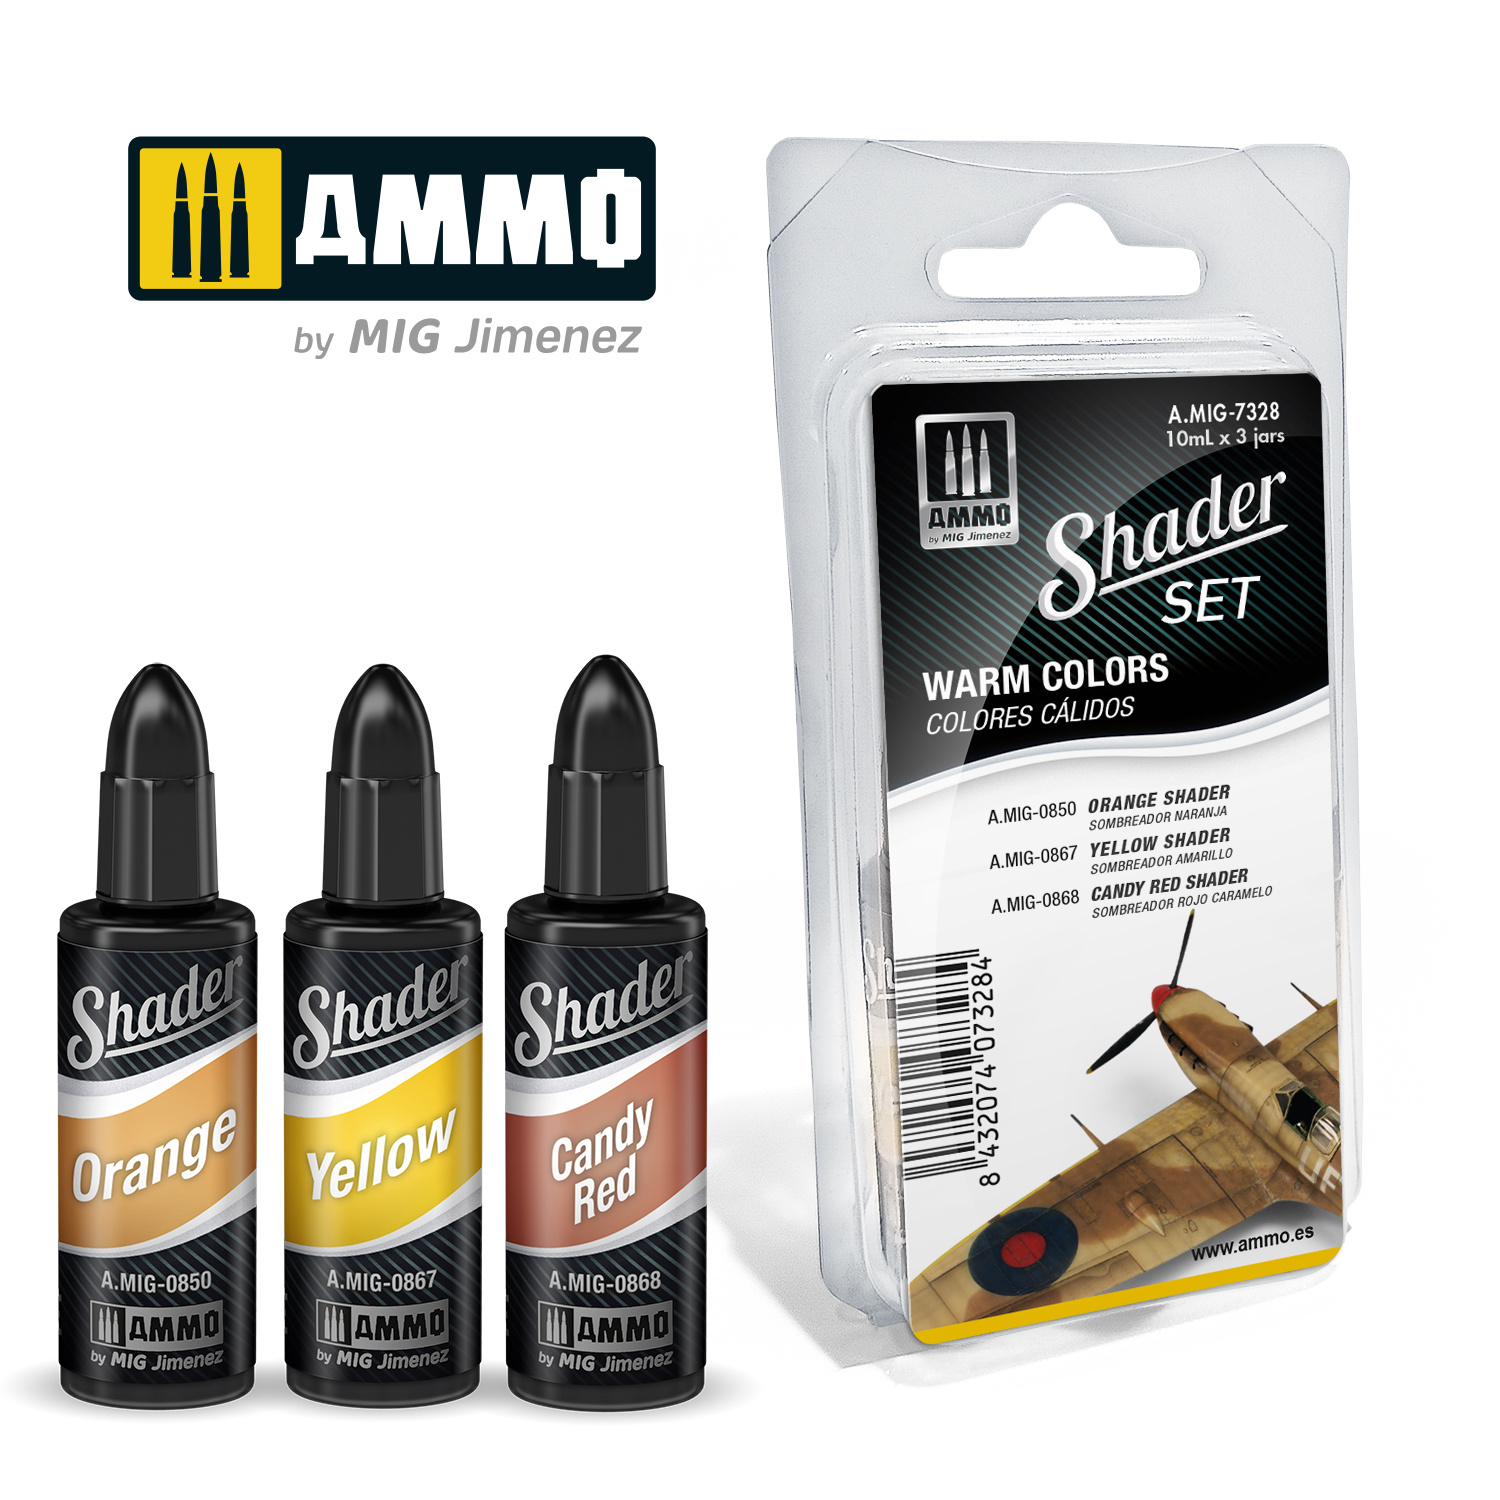 Ammo by Mig Jimenez Shader Set Warm Colors - Ammo by Mig Jimenez - A.MIG-7328